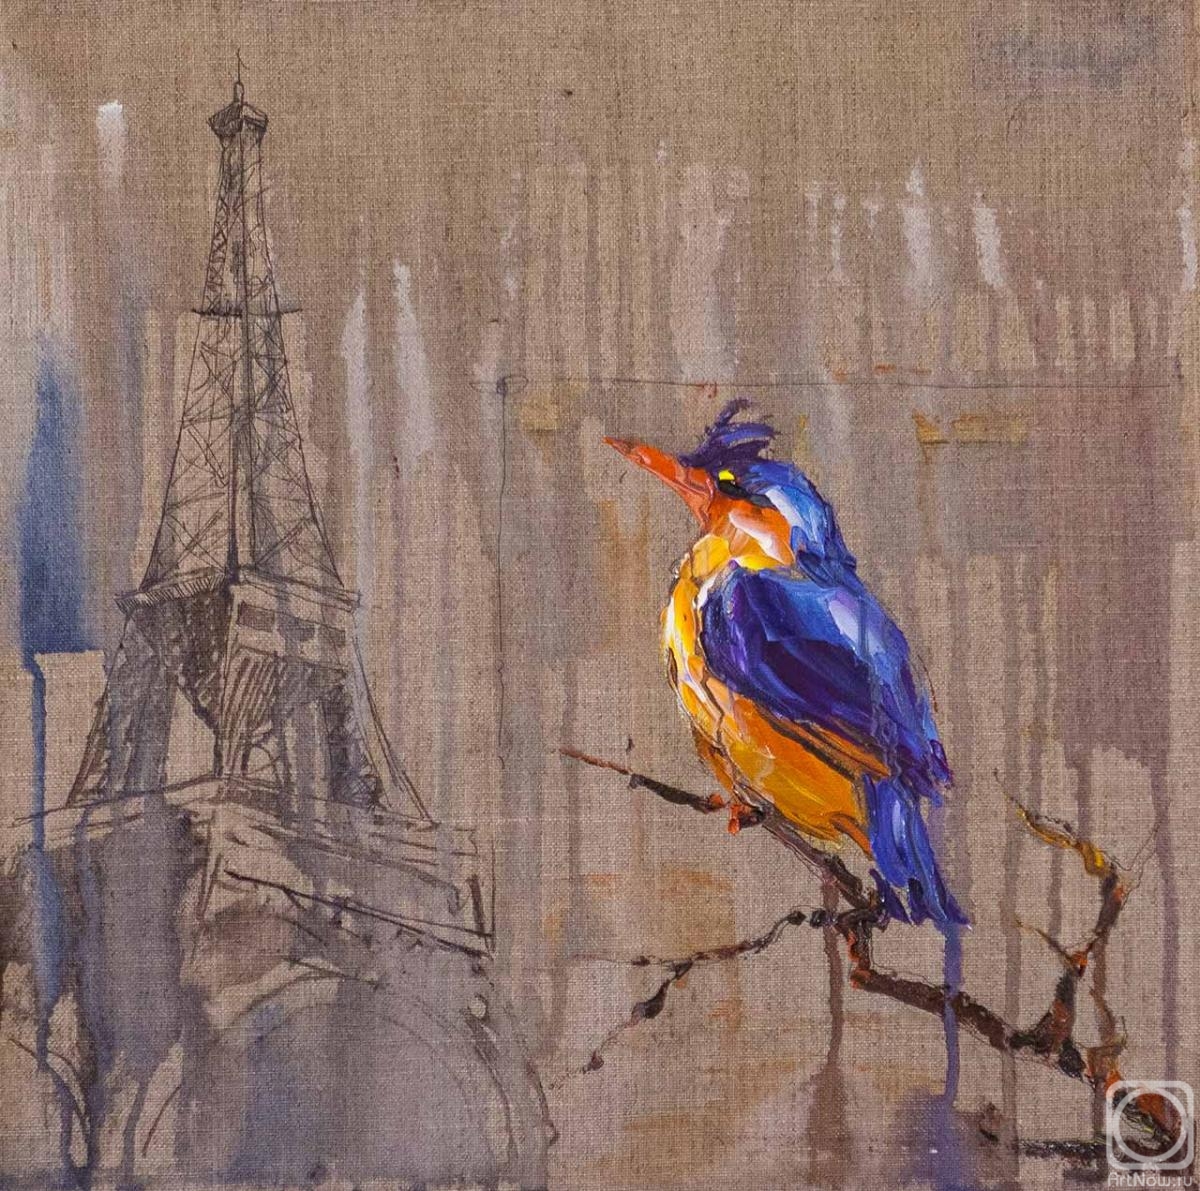 Rodries Jose. Kingfisher. Paris